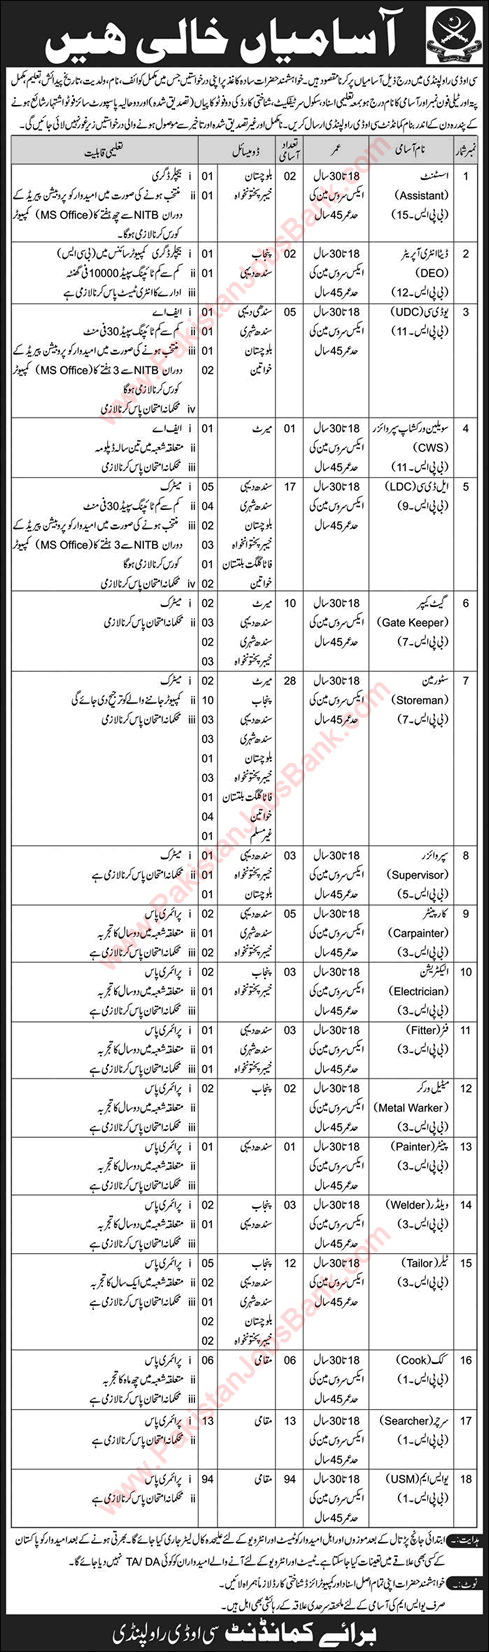 COD Rawalpindi Jobs 2019 February USM, Storeman, Clerk & Others Central Ordnance Depot Pak Army Latest